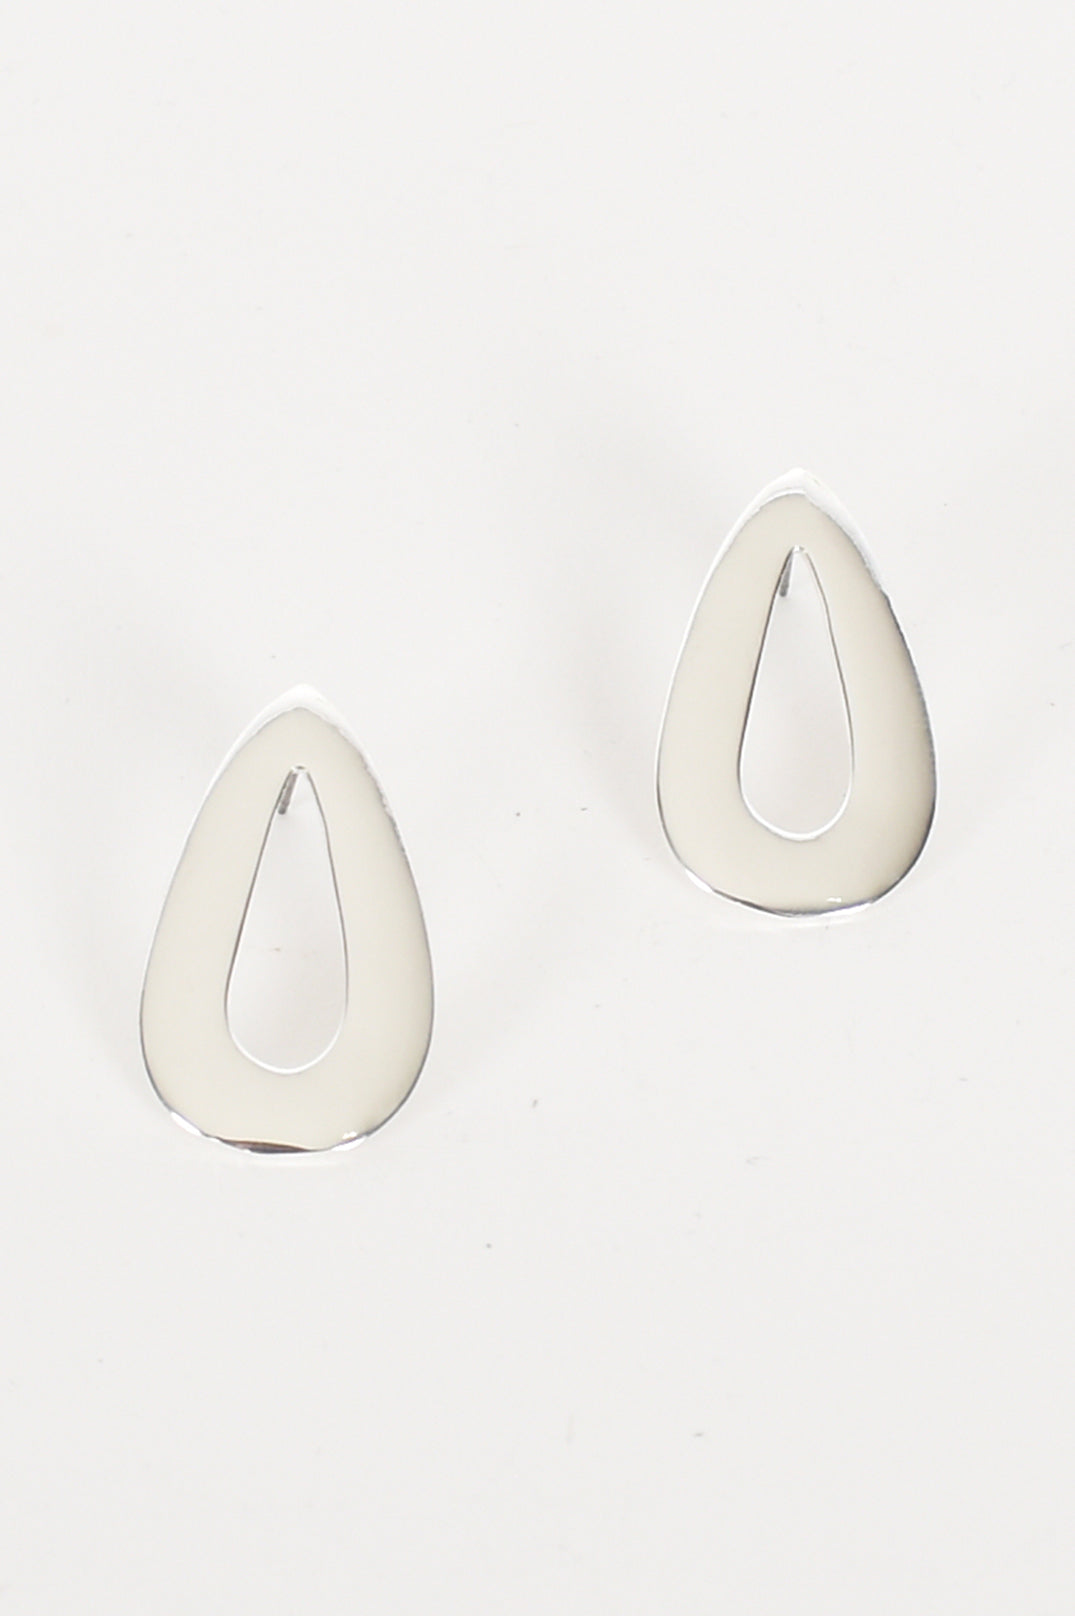 Metal Teardrop Stud Earrings - Silver